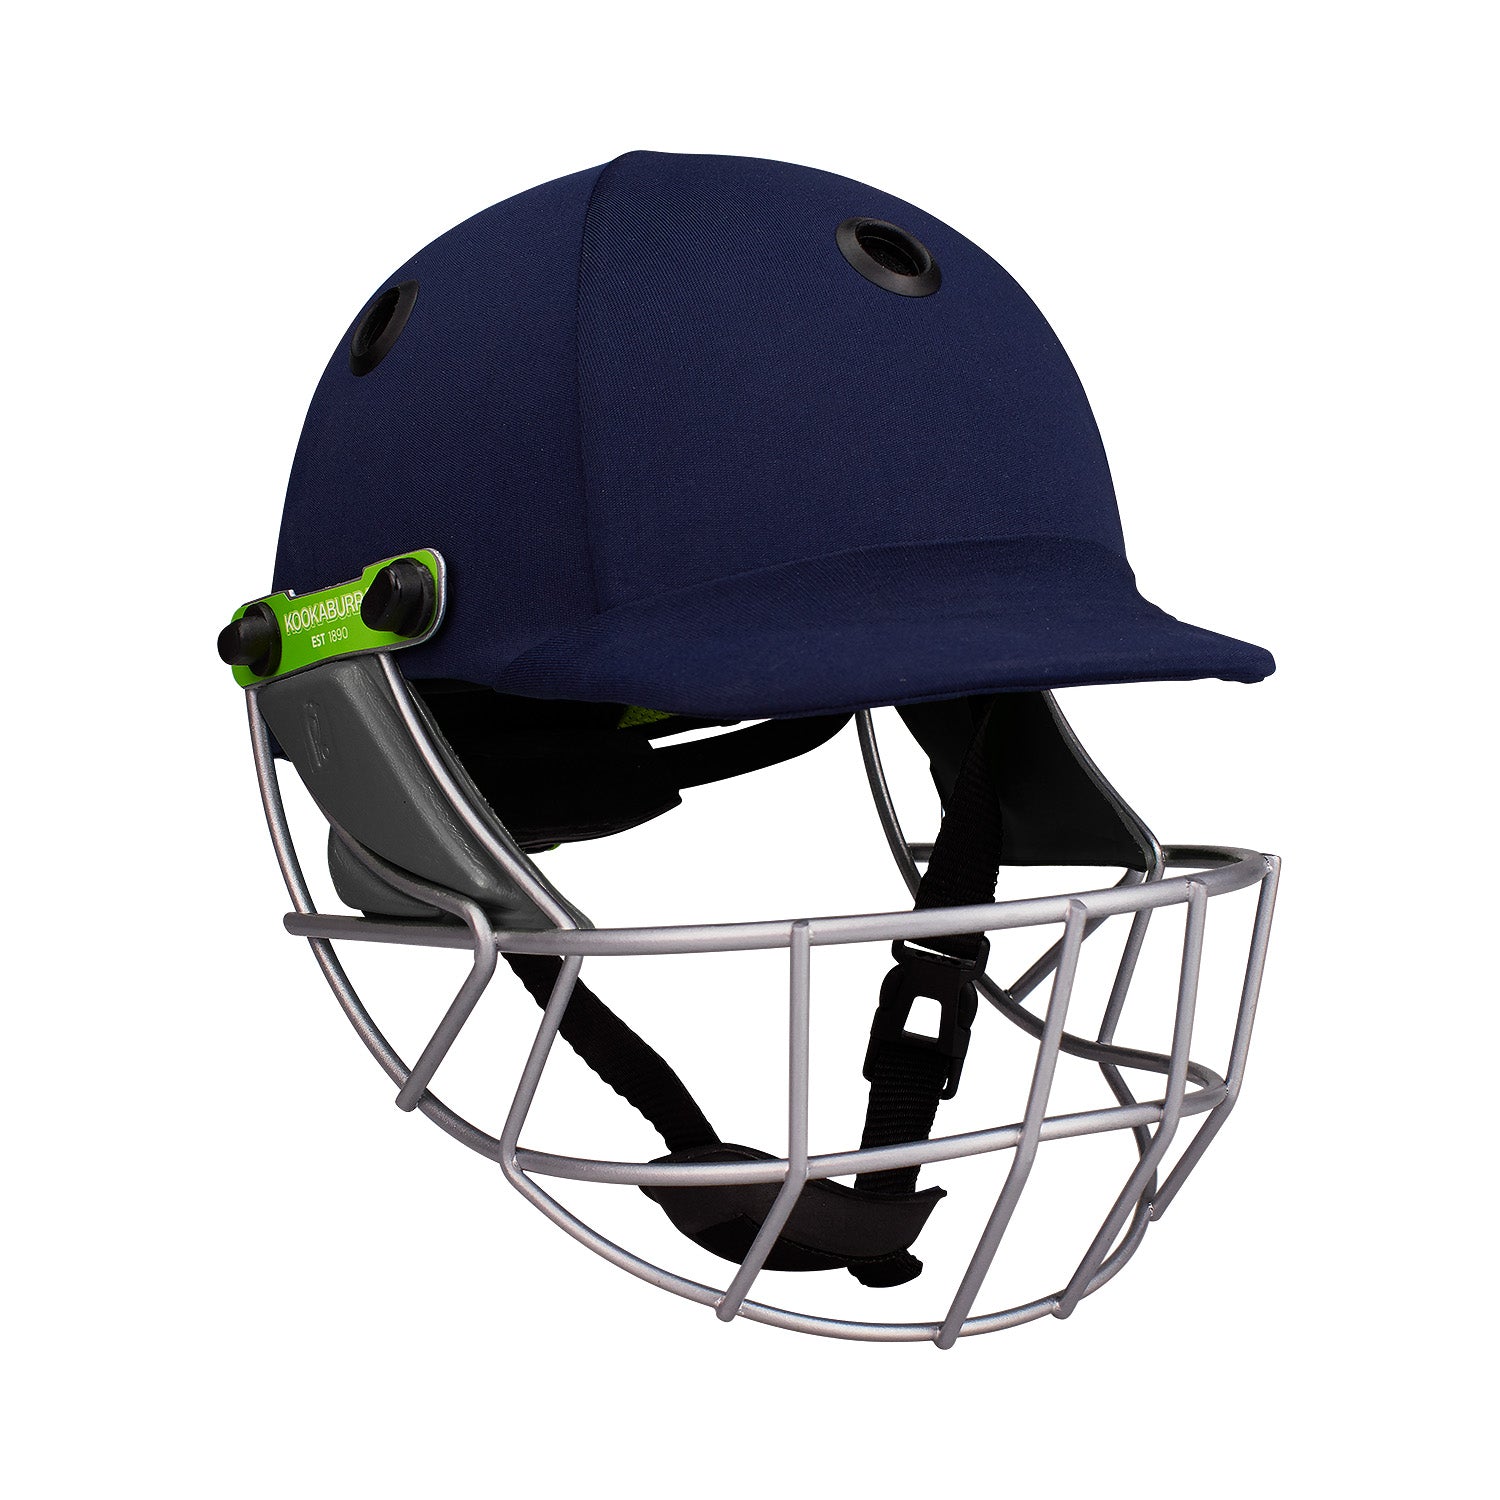 Kookaburra Pro 600F Cricket Helmet Navy Cloth